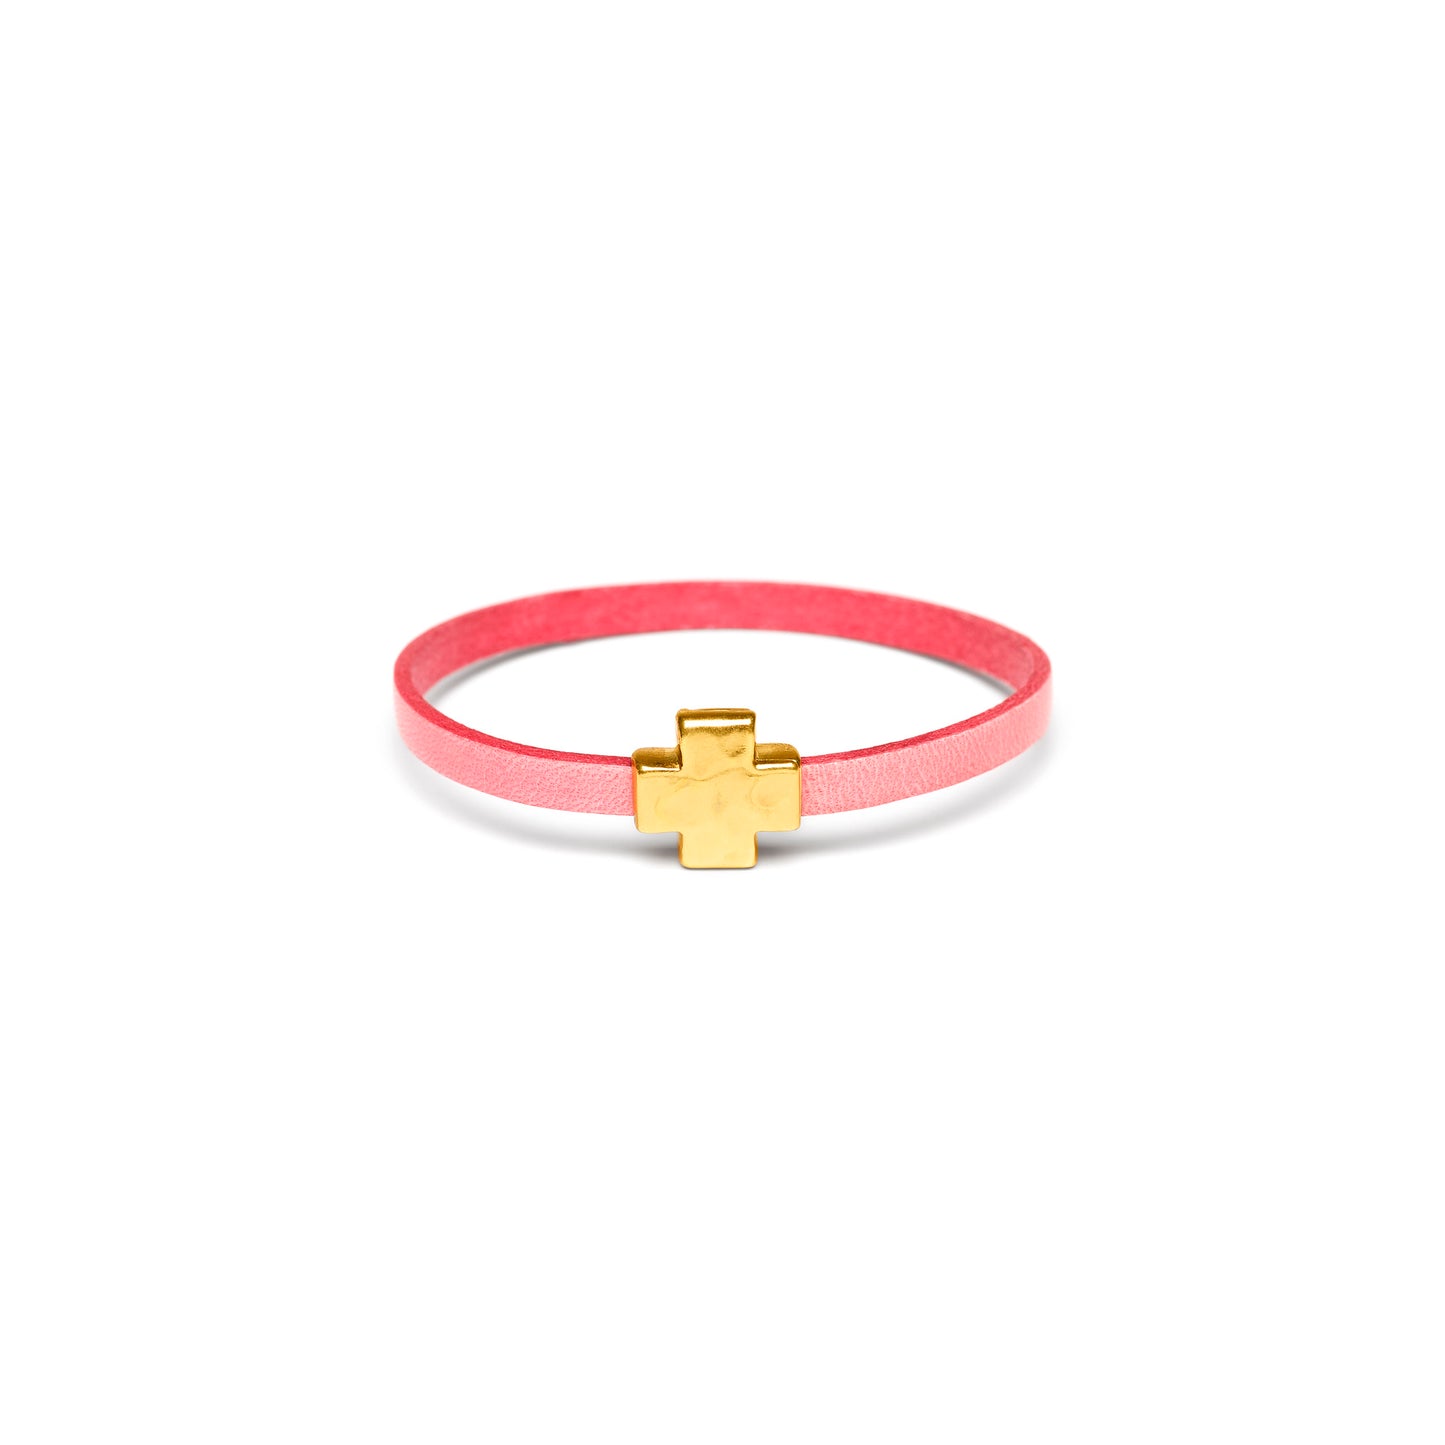 "Wrap it Up Bracelet" with Gold Cross - Single Length - Pink